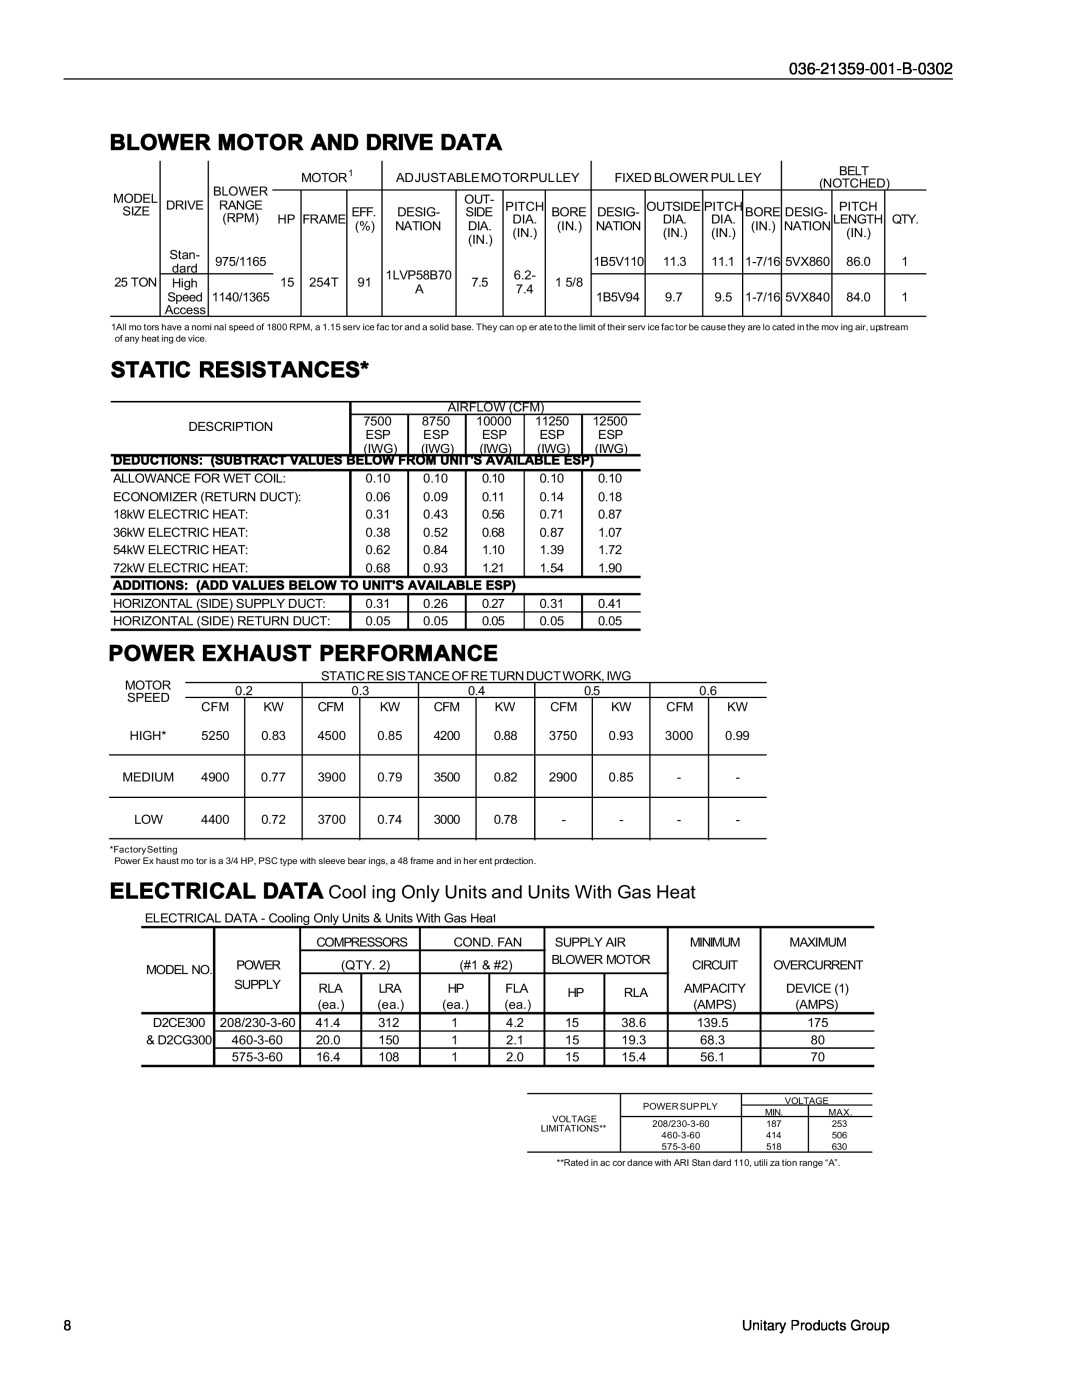 York D2CE, D2CG Blower Motor And Drive Data, Static Resistances, Power Exhaust Performance, 036-21359-001-B-0302, Below 